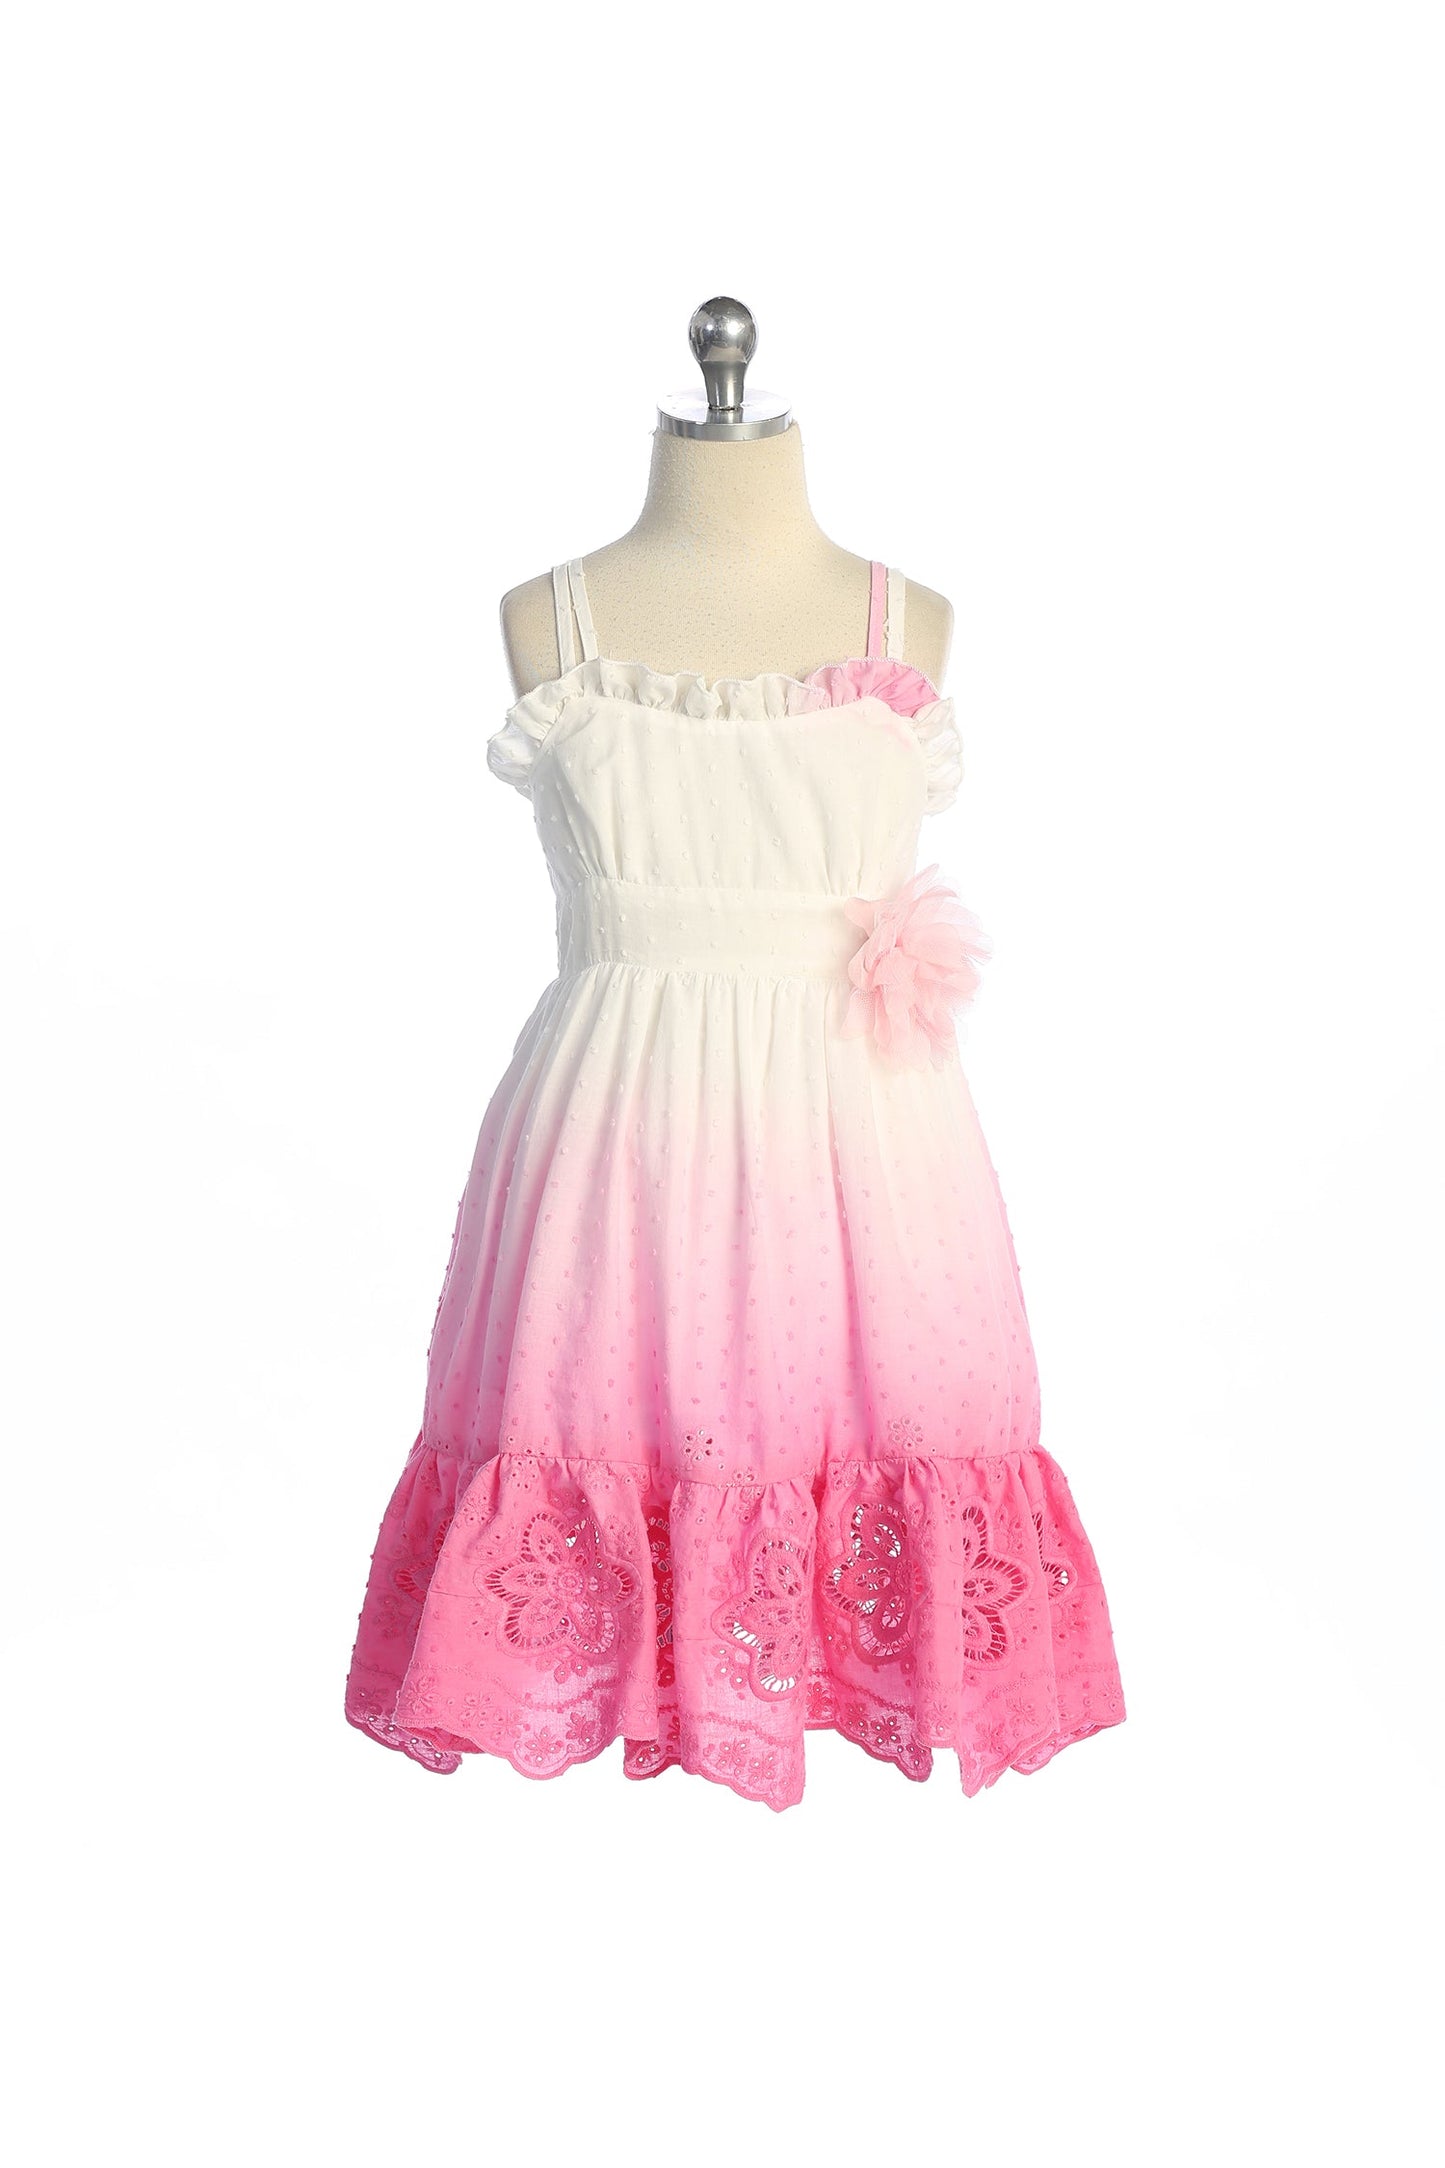 Dress - Ruffle Ombre Cotton Dress